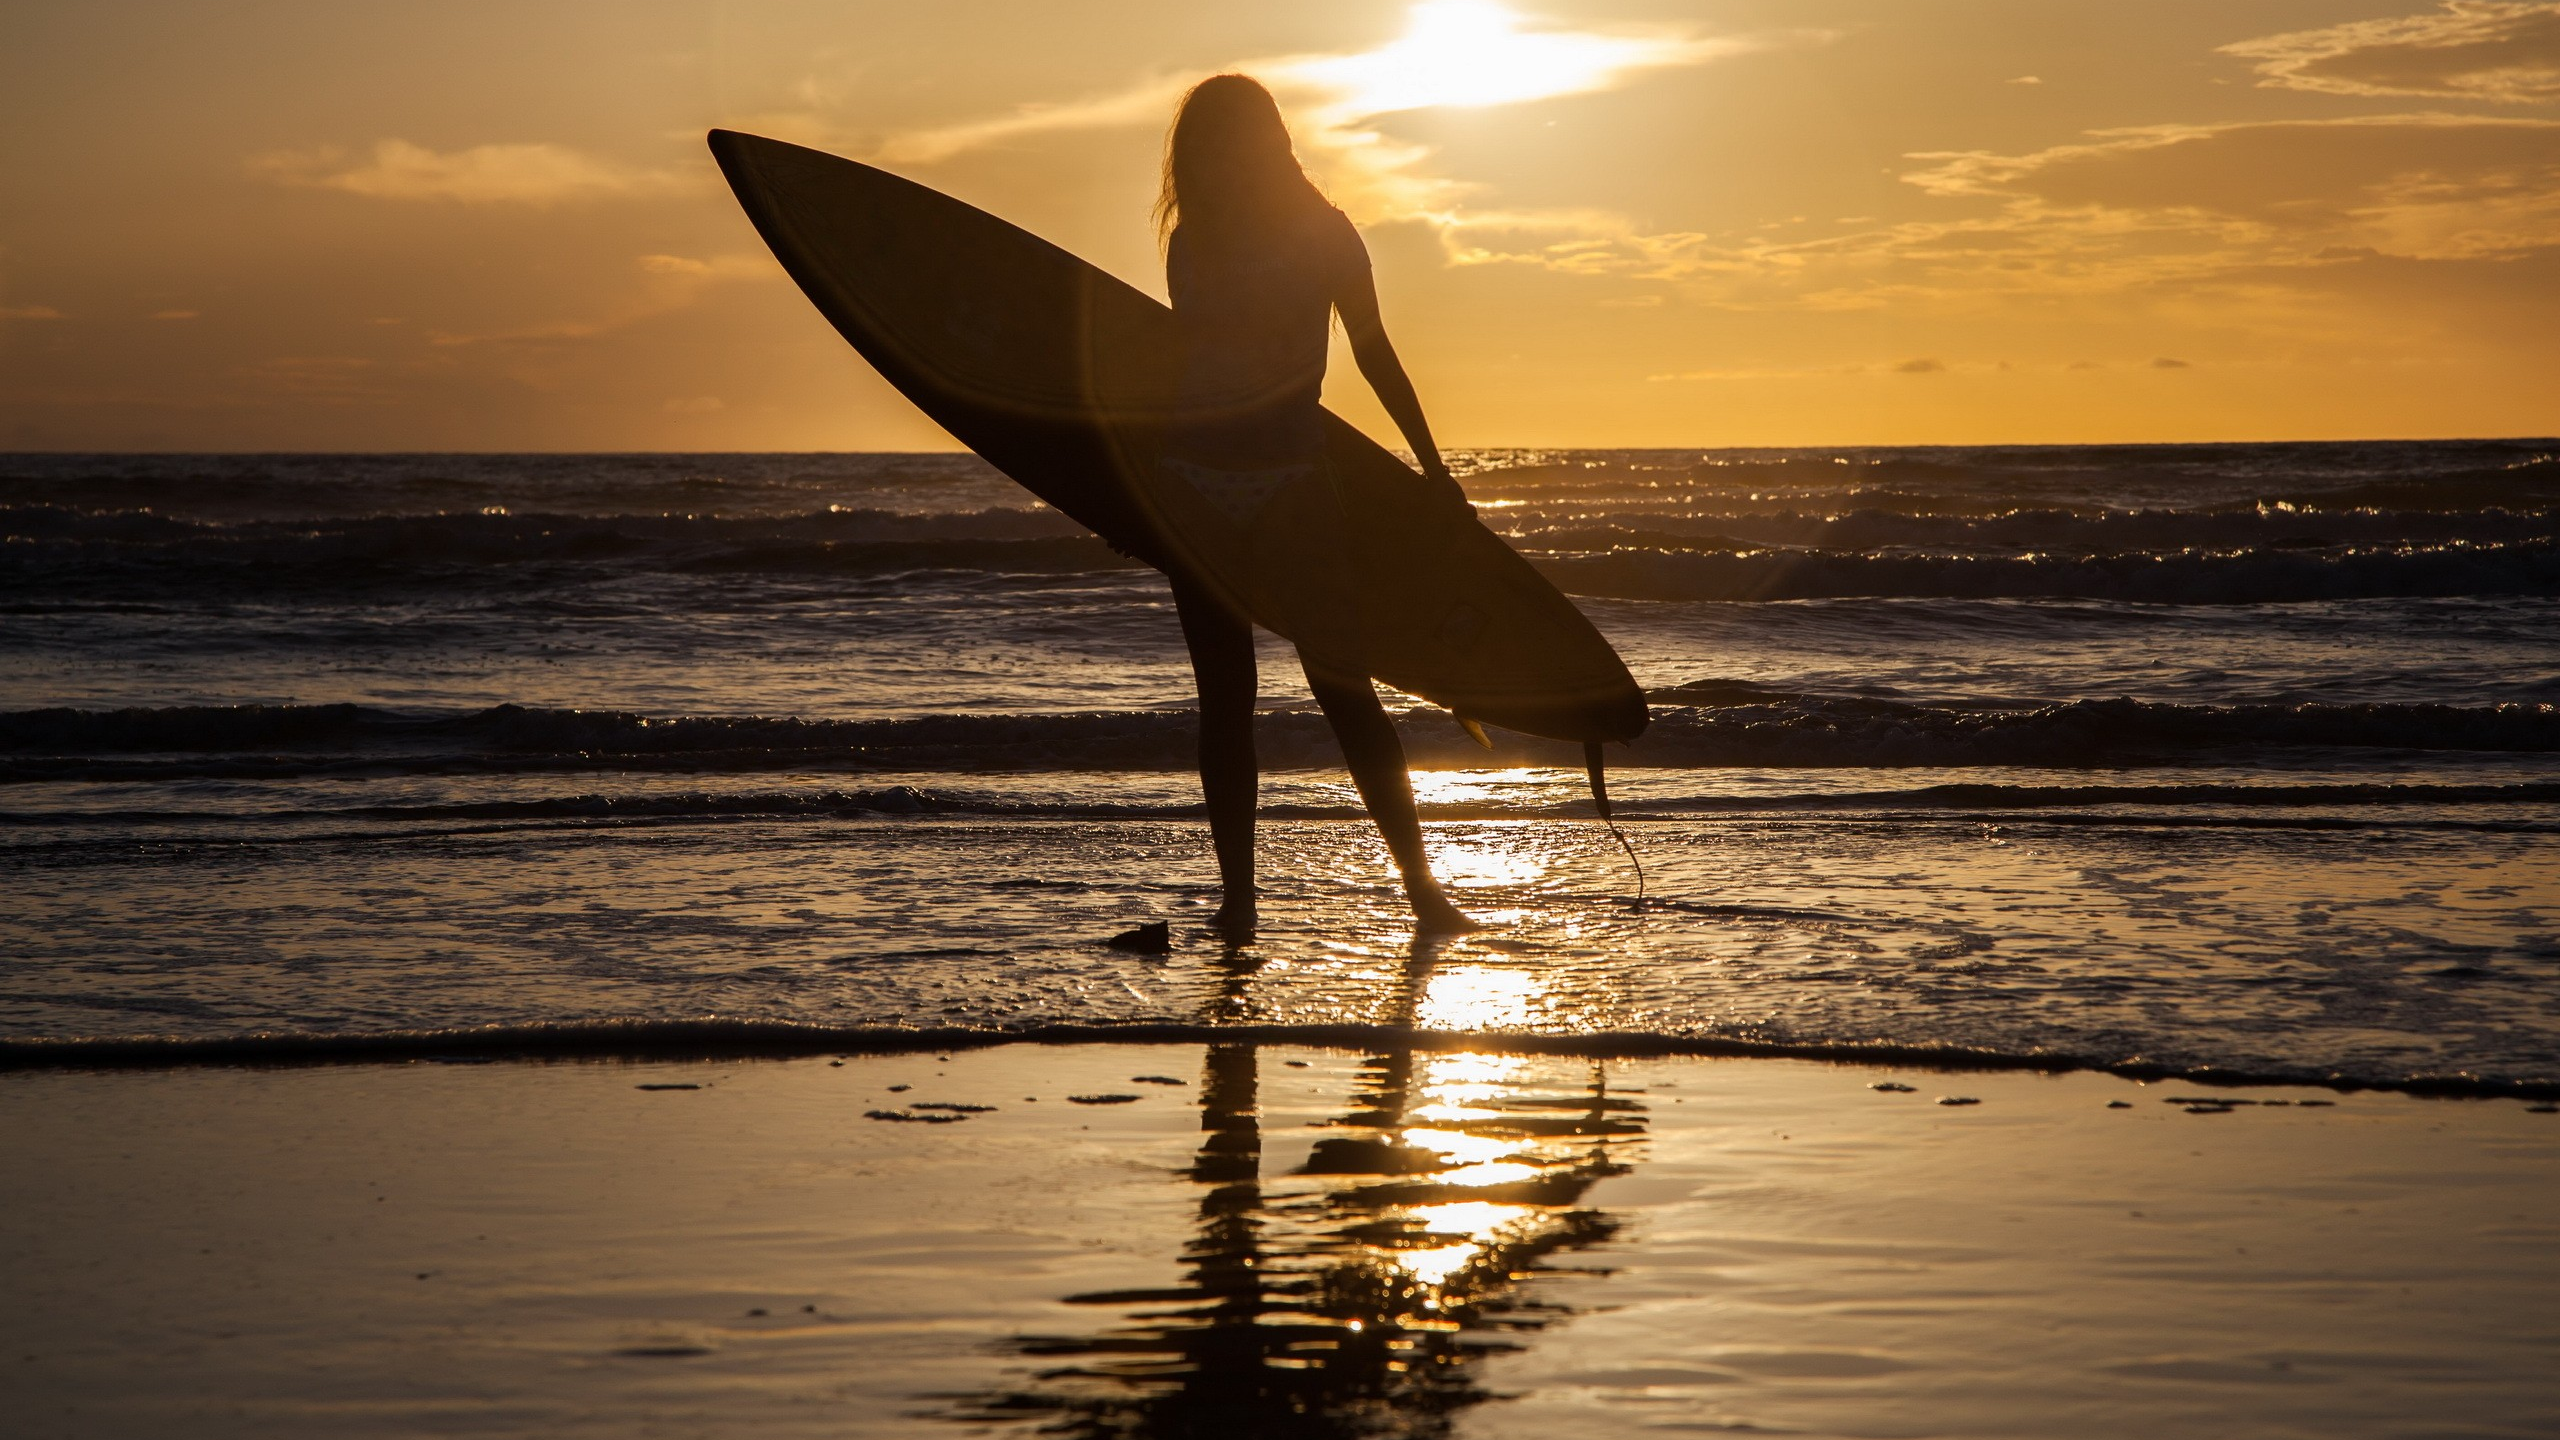 Download 2560x1440 sea, surfing, sun, women, silhouette, beach